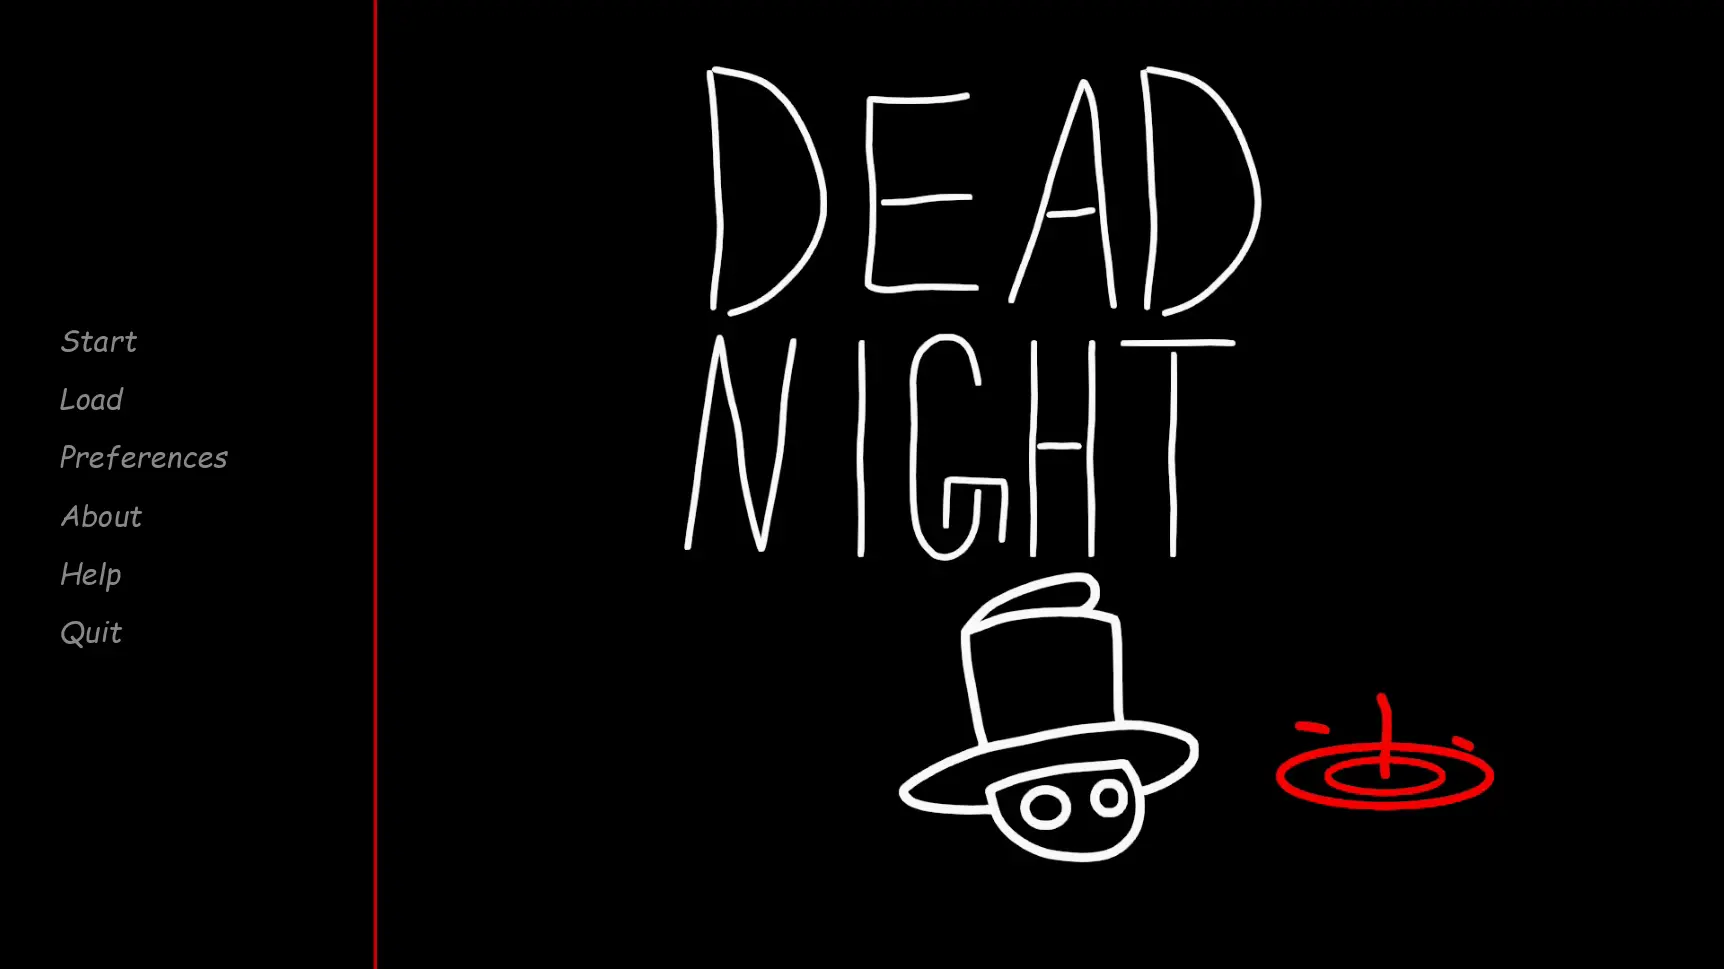 Dead Night main image